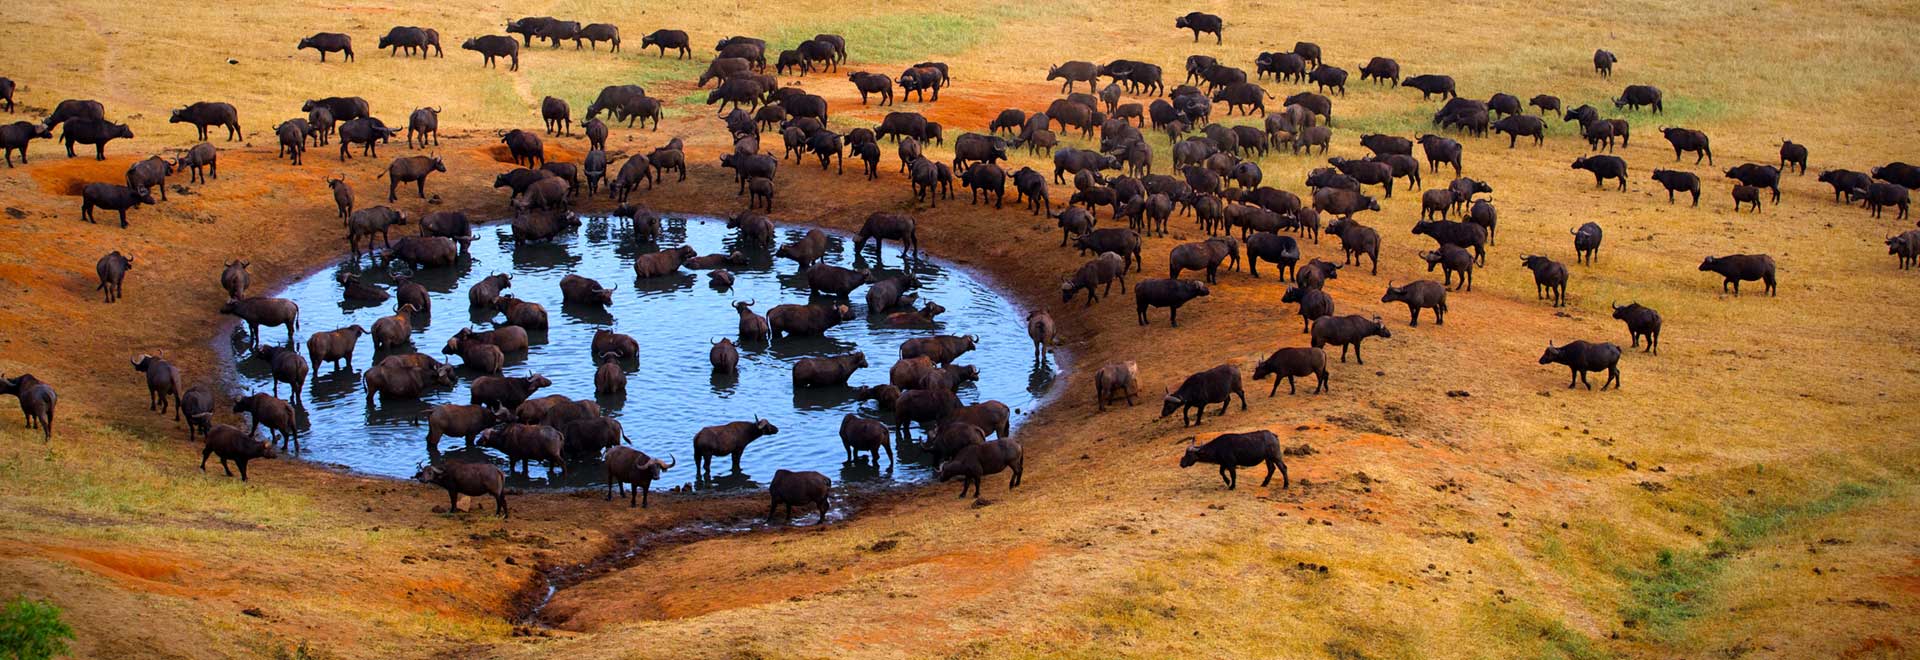 East Africa Kenya Tanzania Masai Mara Water Buffalo